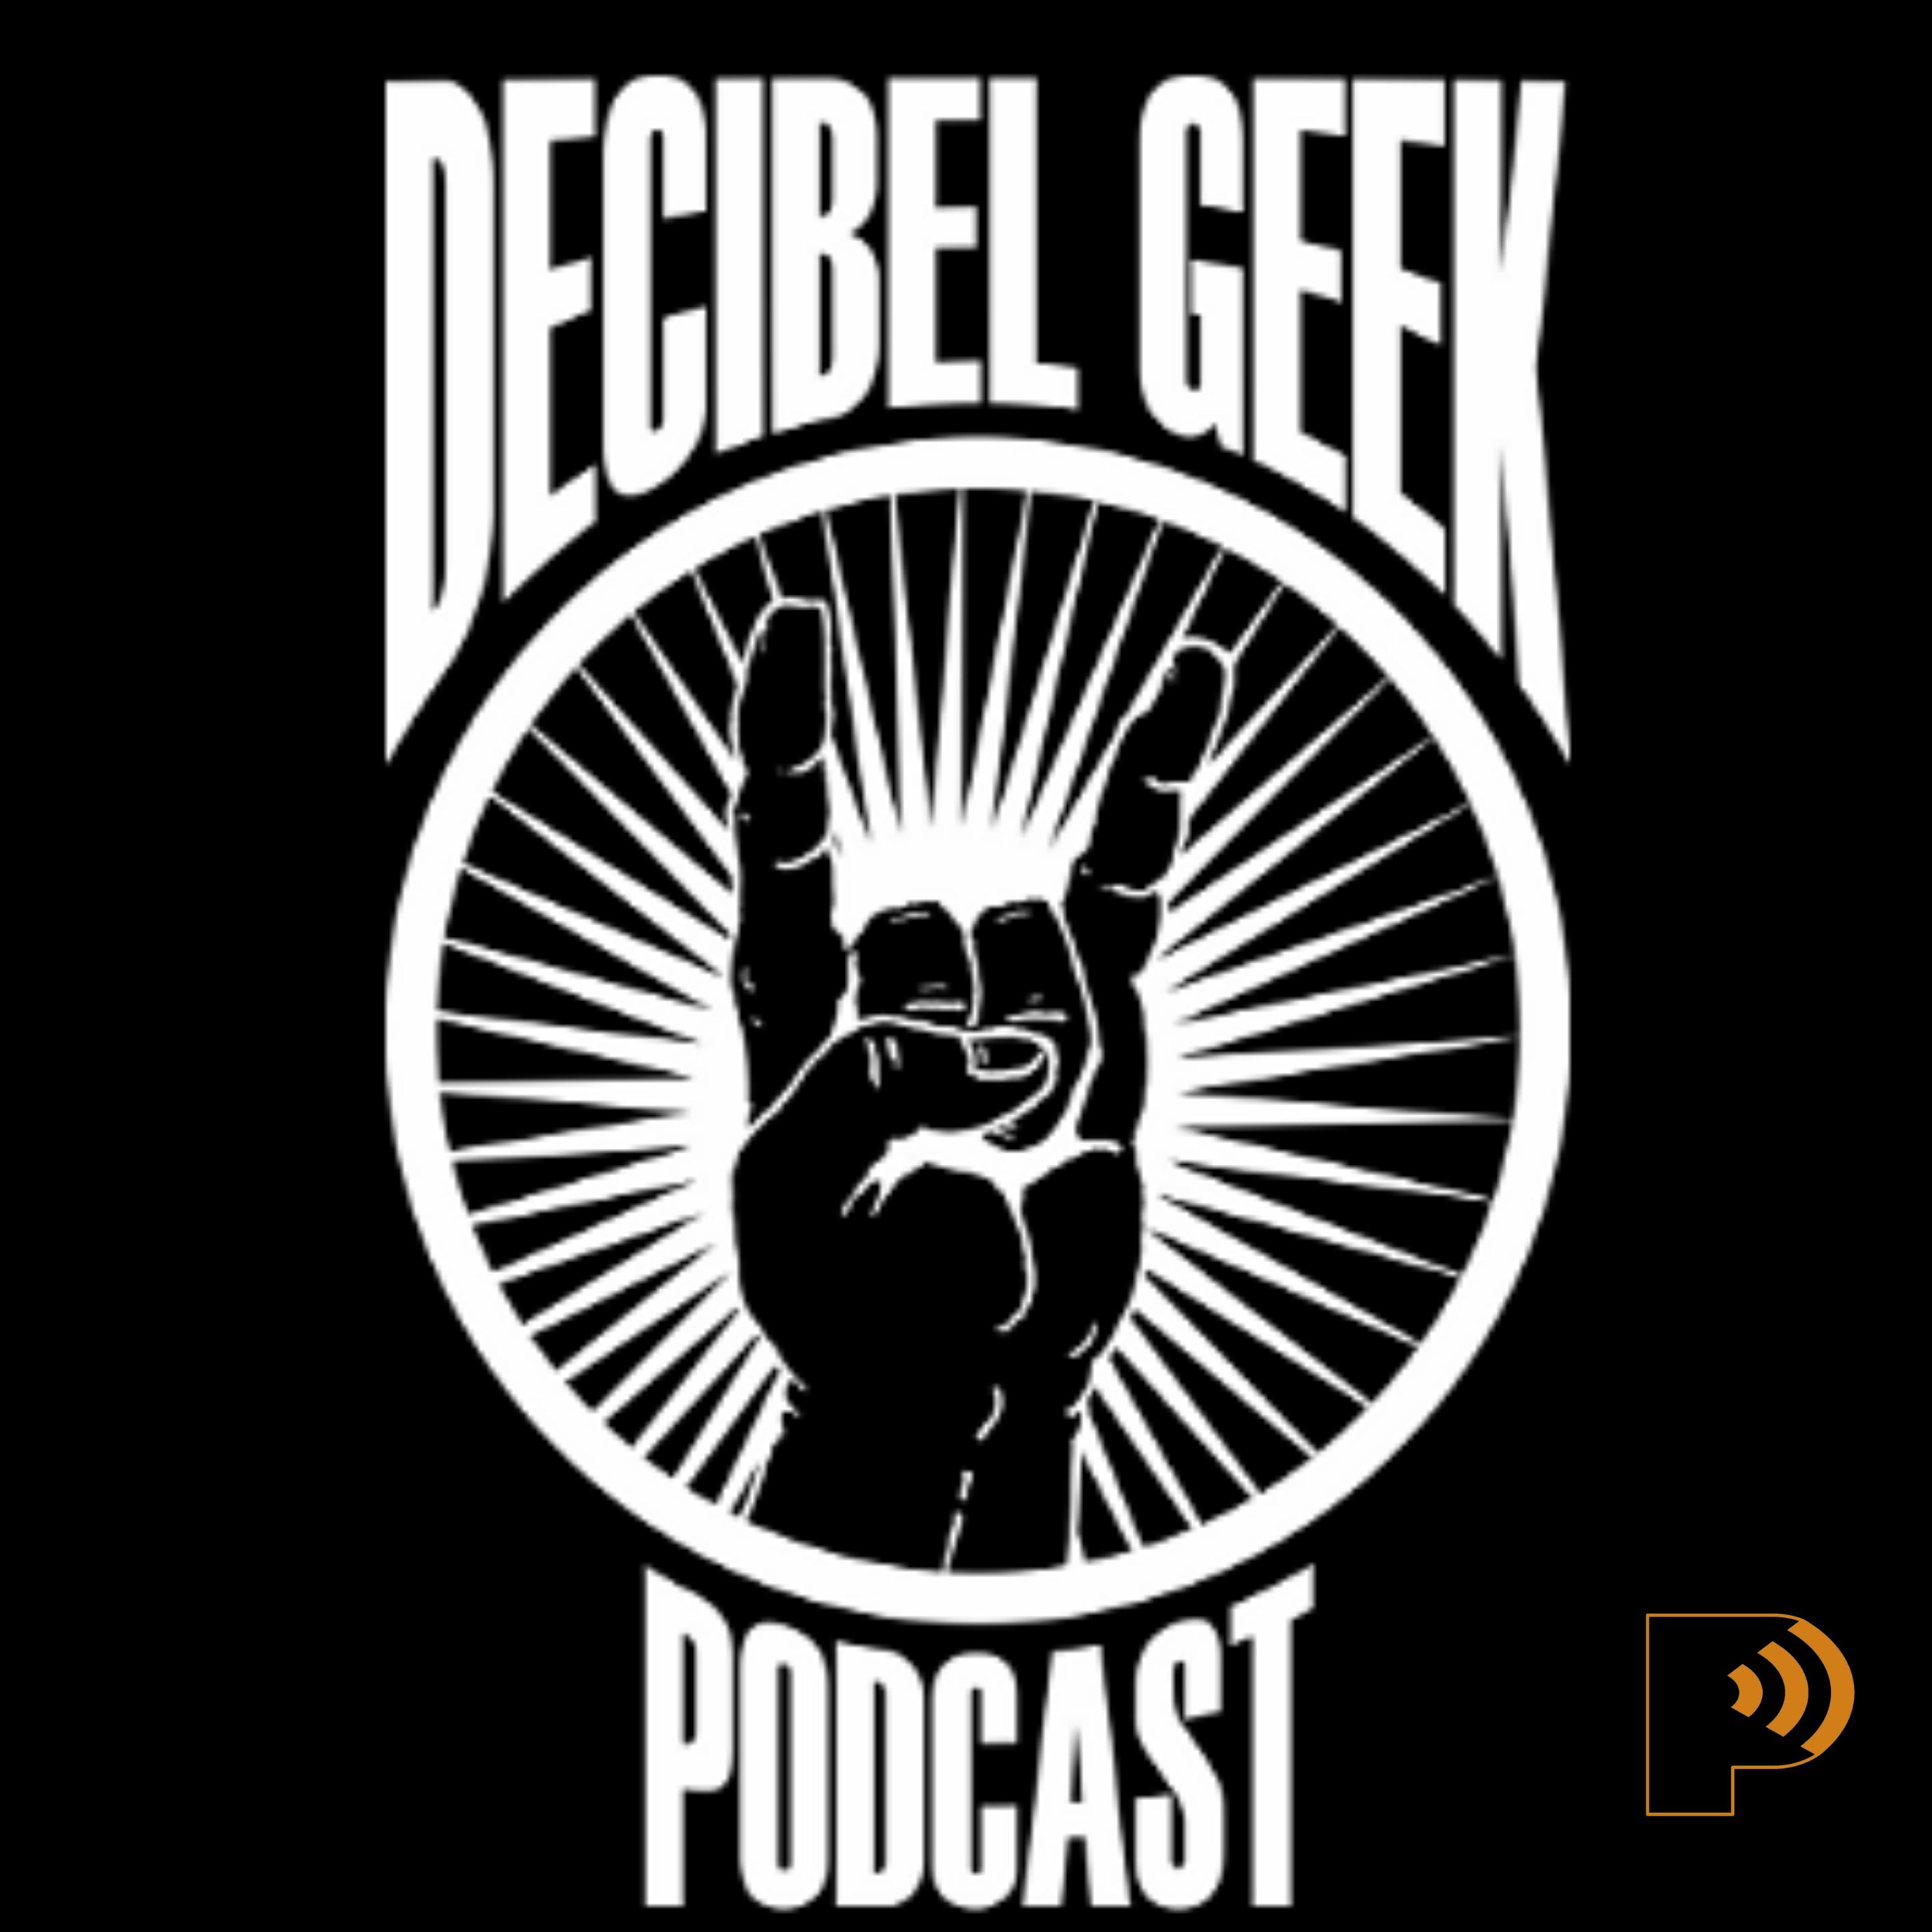 Decibel Geek Podcast - Beat the Geek Week - Ep574